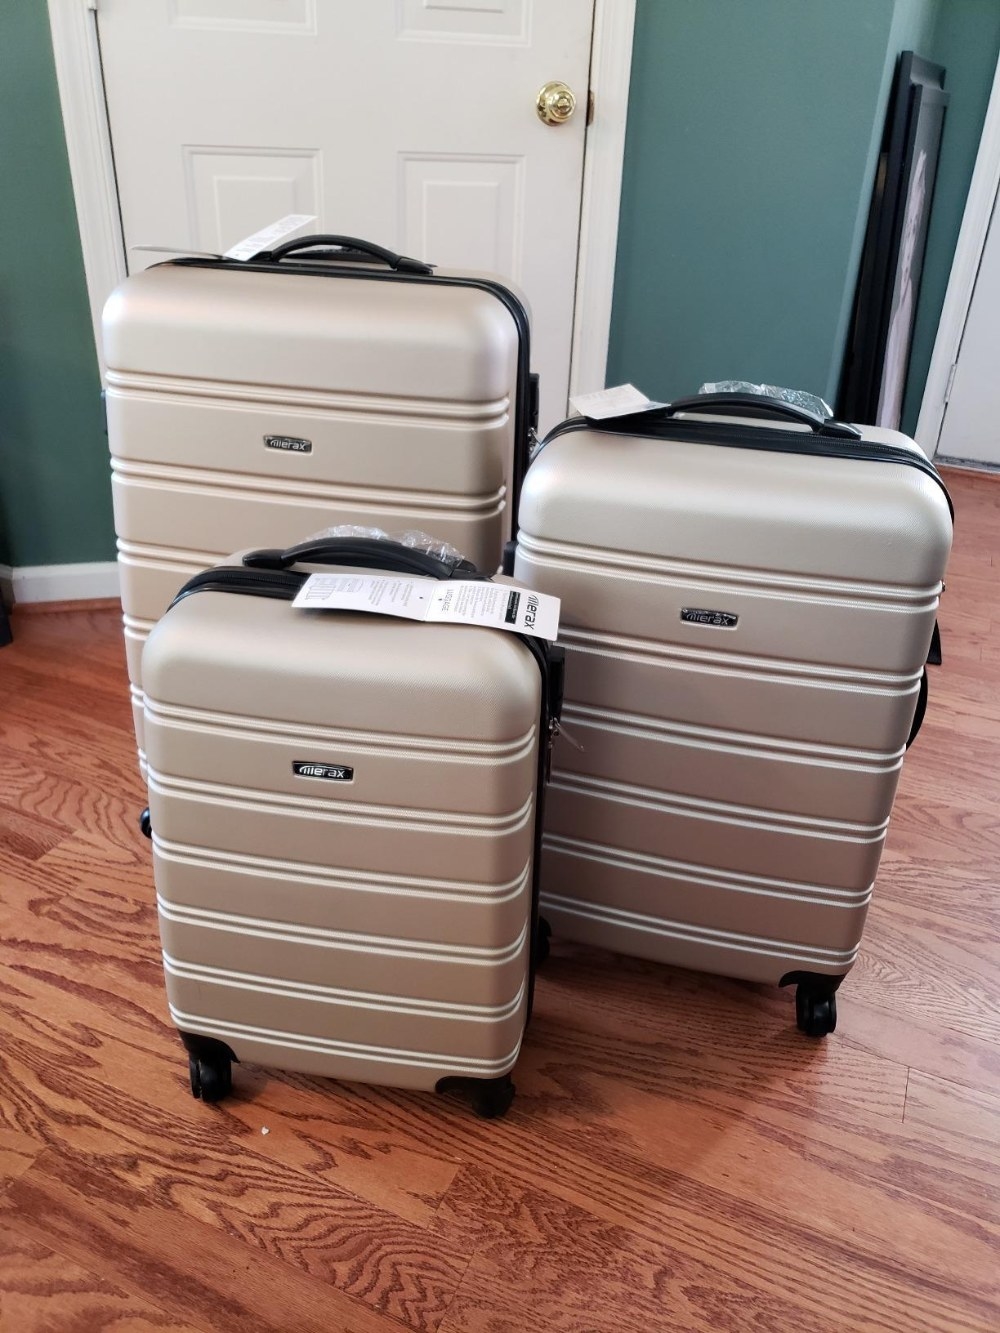 The suitcase set